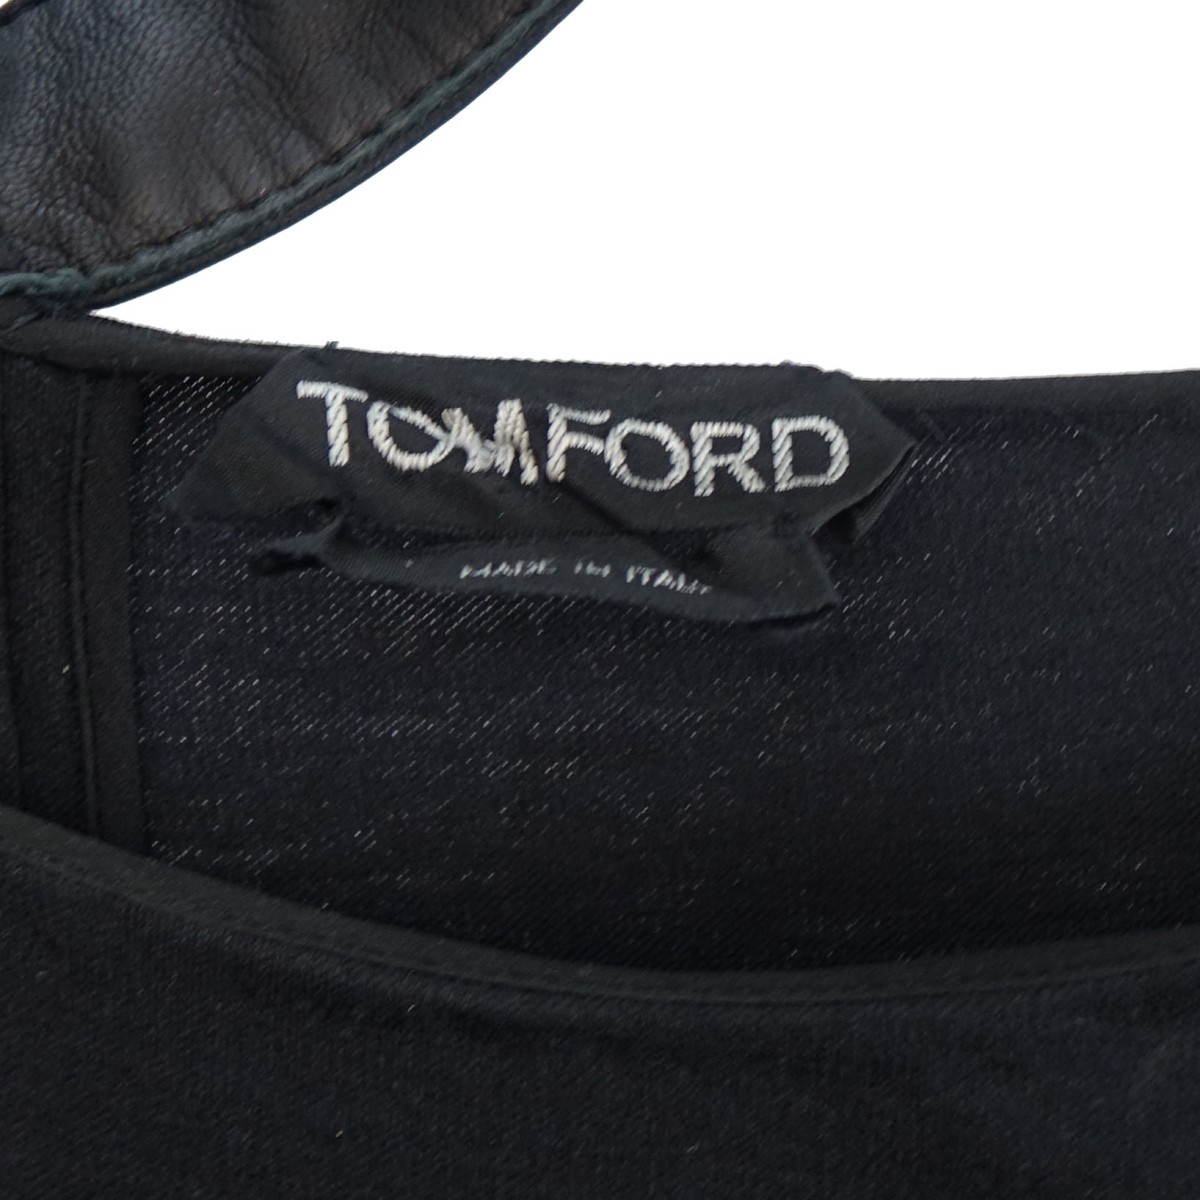 Tom Ford Dress